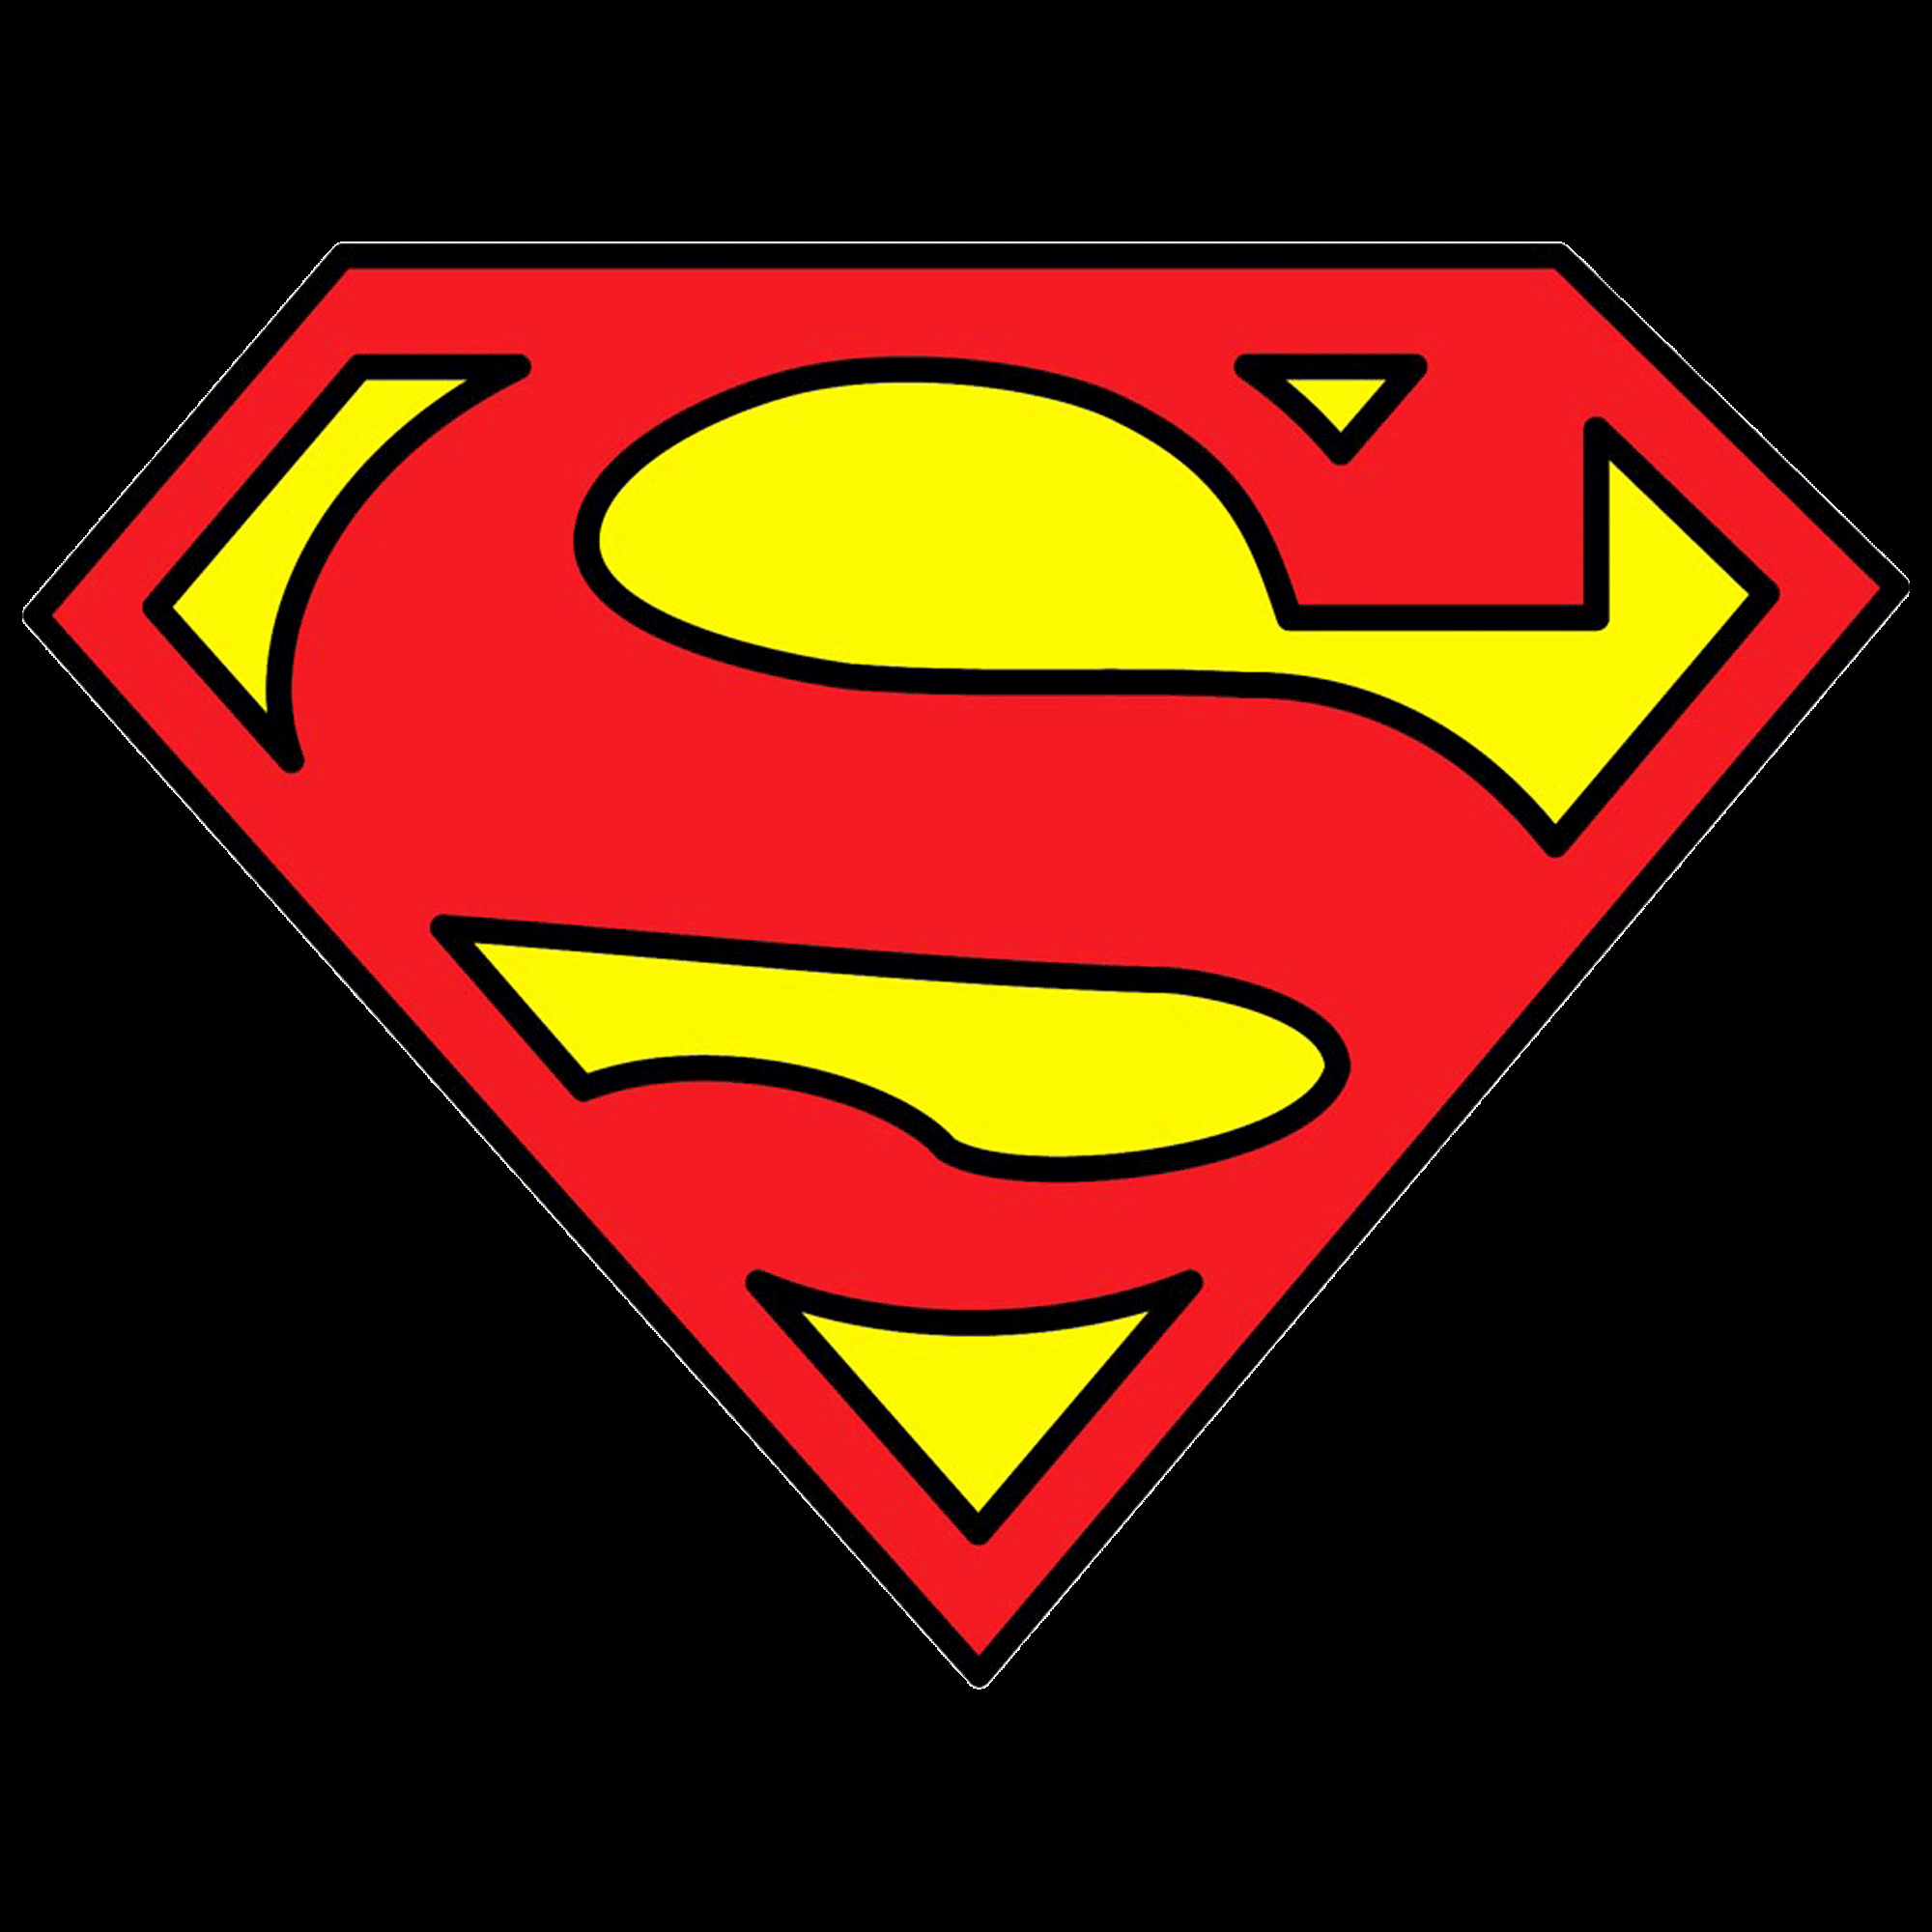 Superman Logo Stencil Best Of Free Superman Logo Template Download Free Clip Art Free